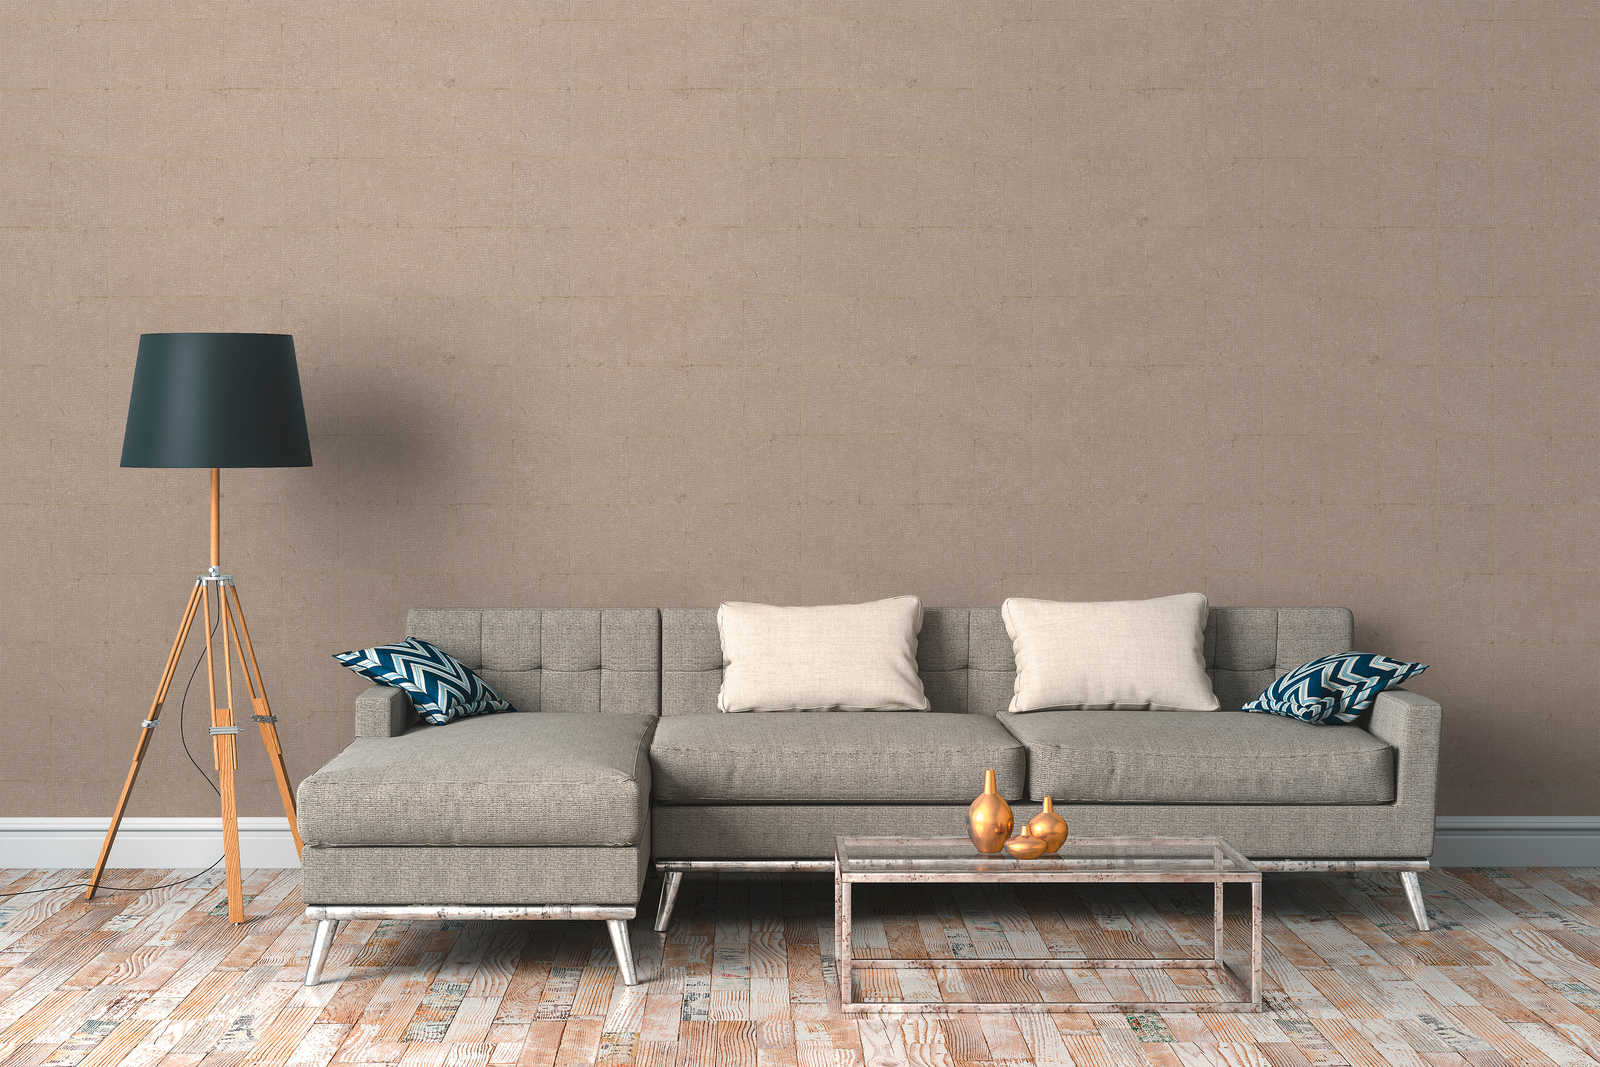             Tile optics wallpaper used look & crackle effect - brown
        